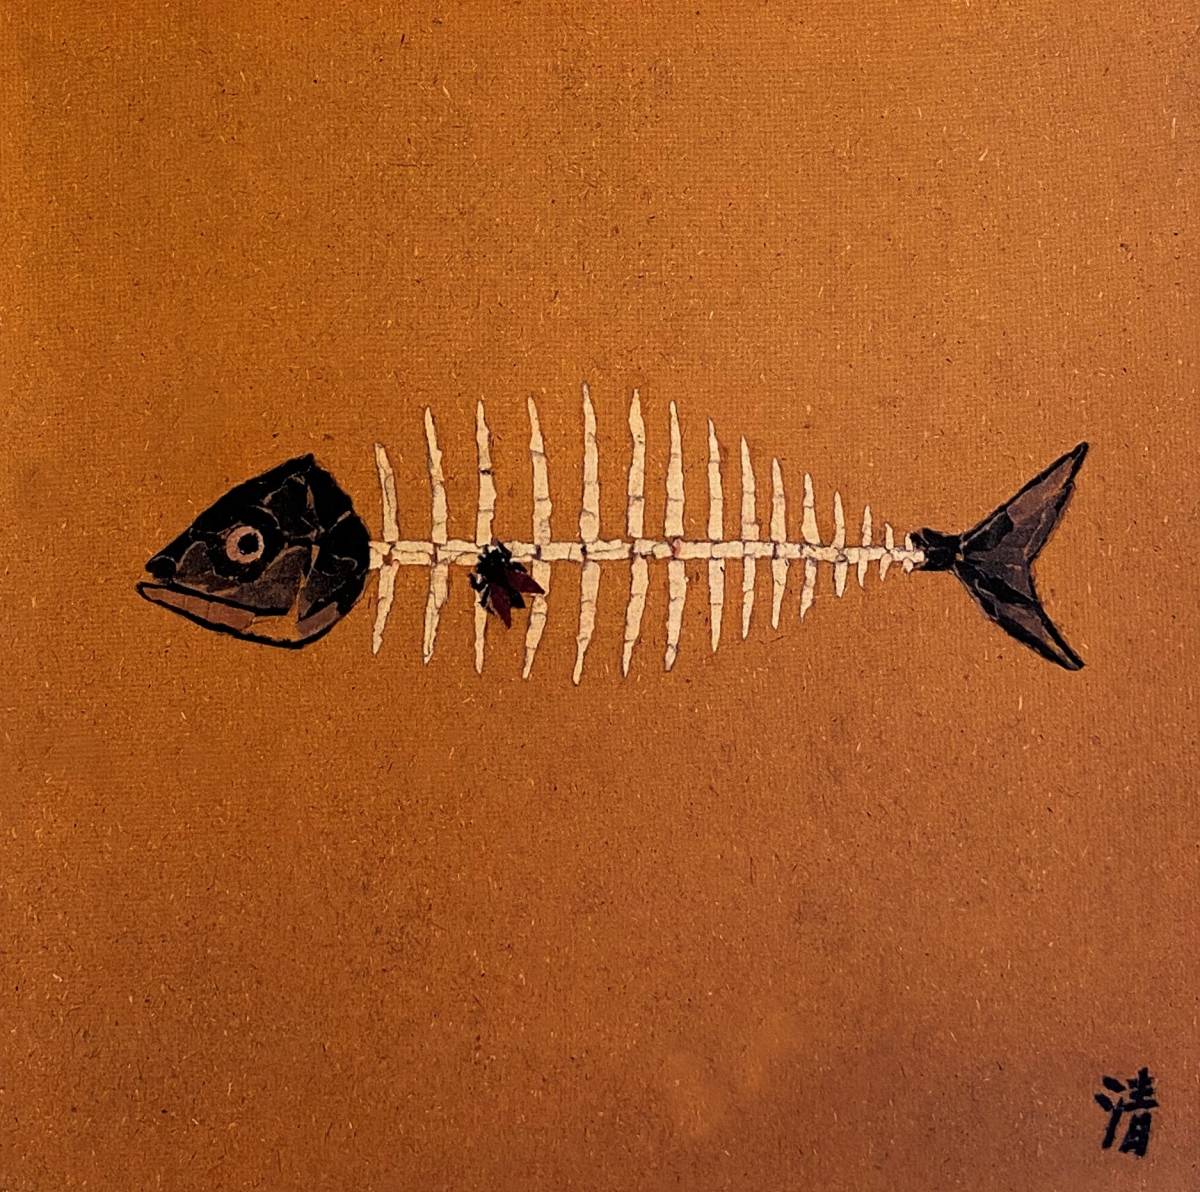 Kiyoshi Yamashita, (Fly on fish bone), rare art book paintings, Luxury new item and framed, Good condition, free shipping, artwork, painting, others